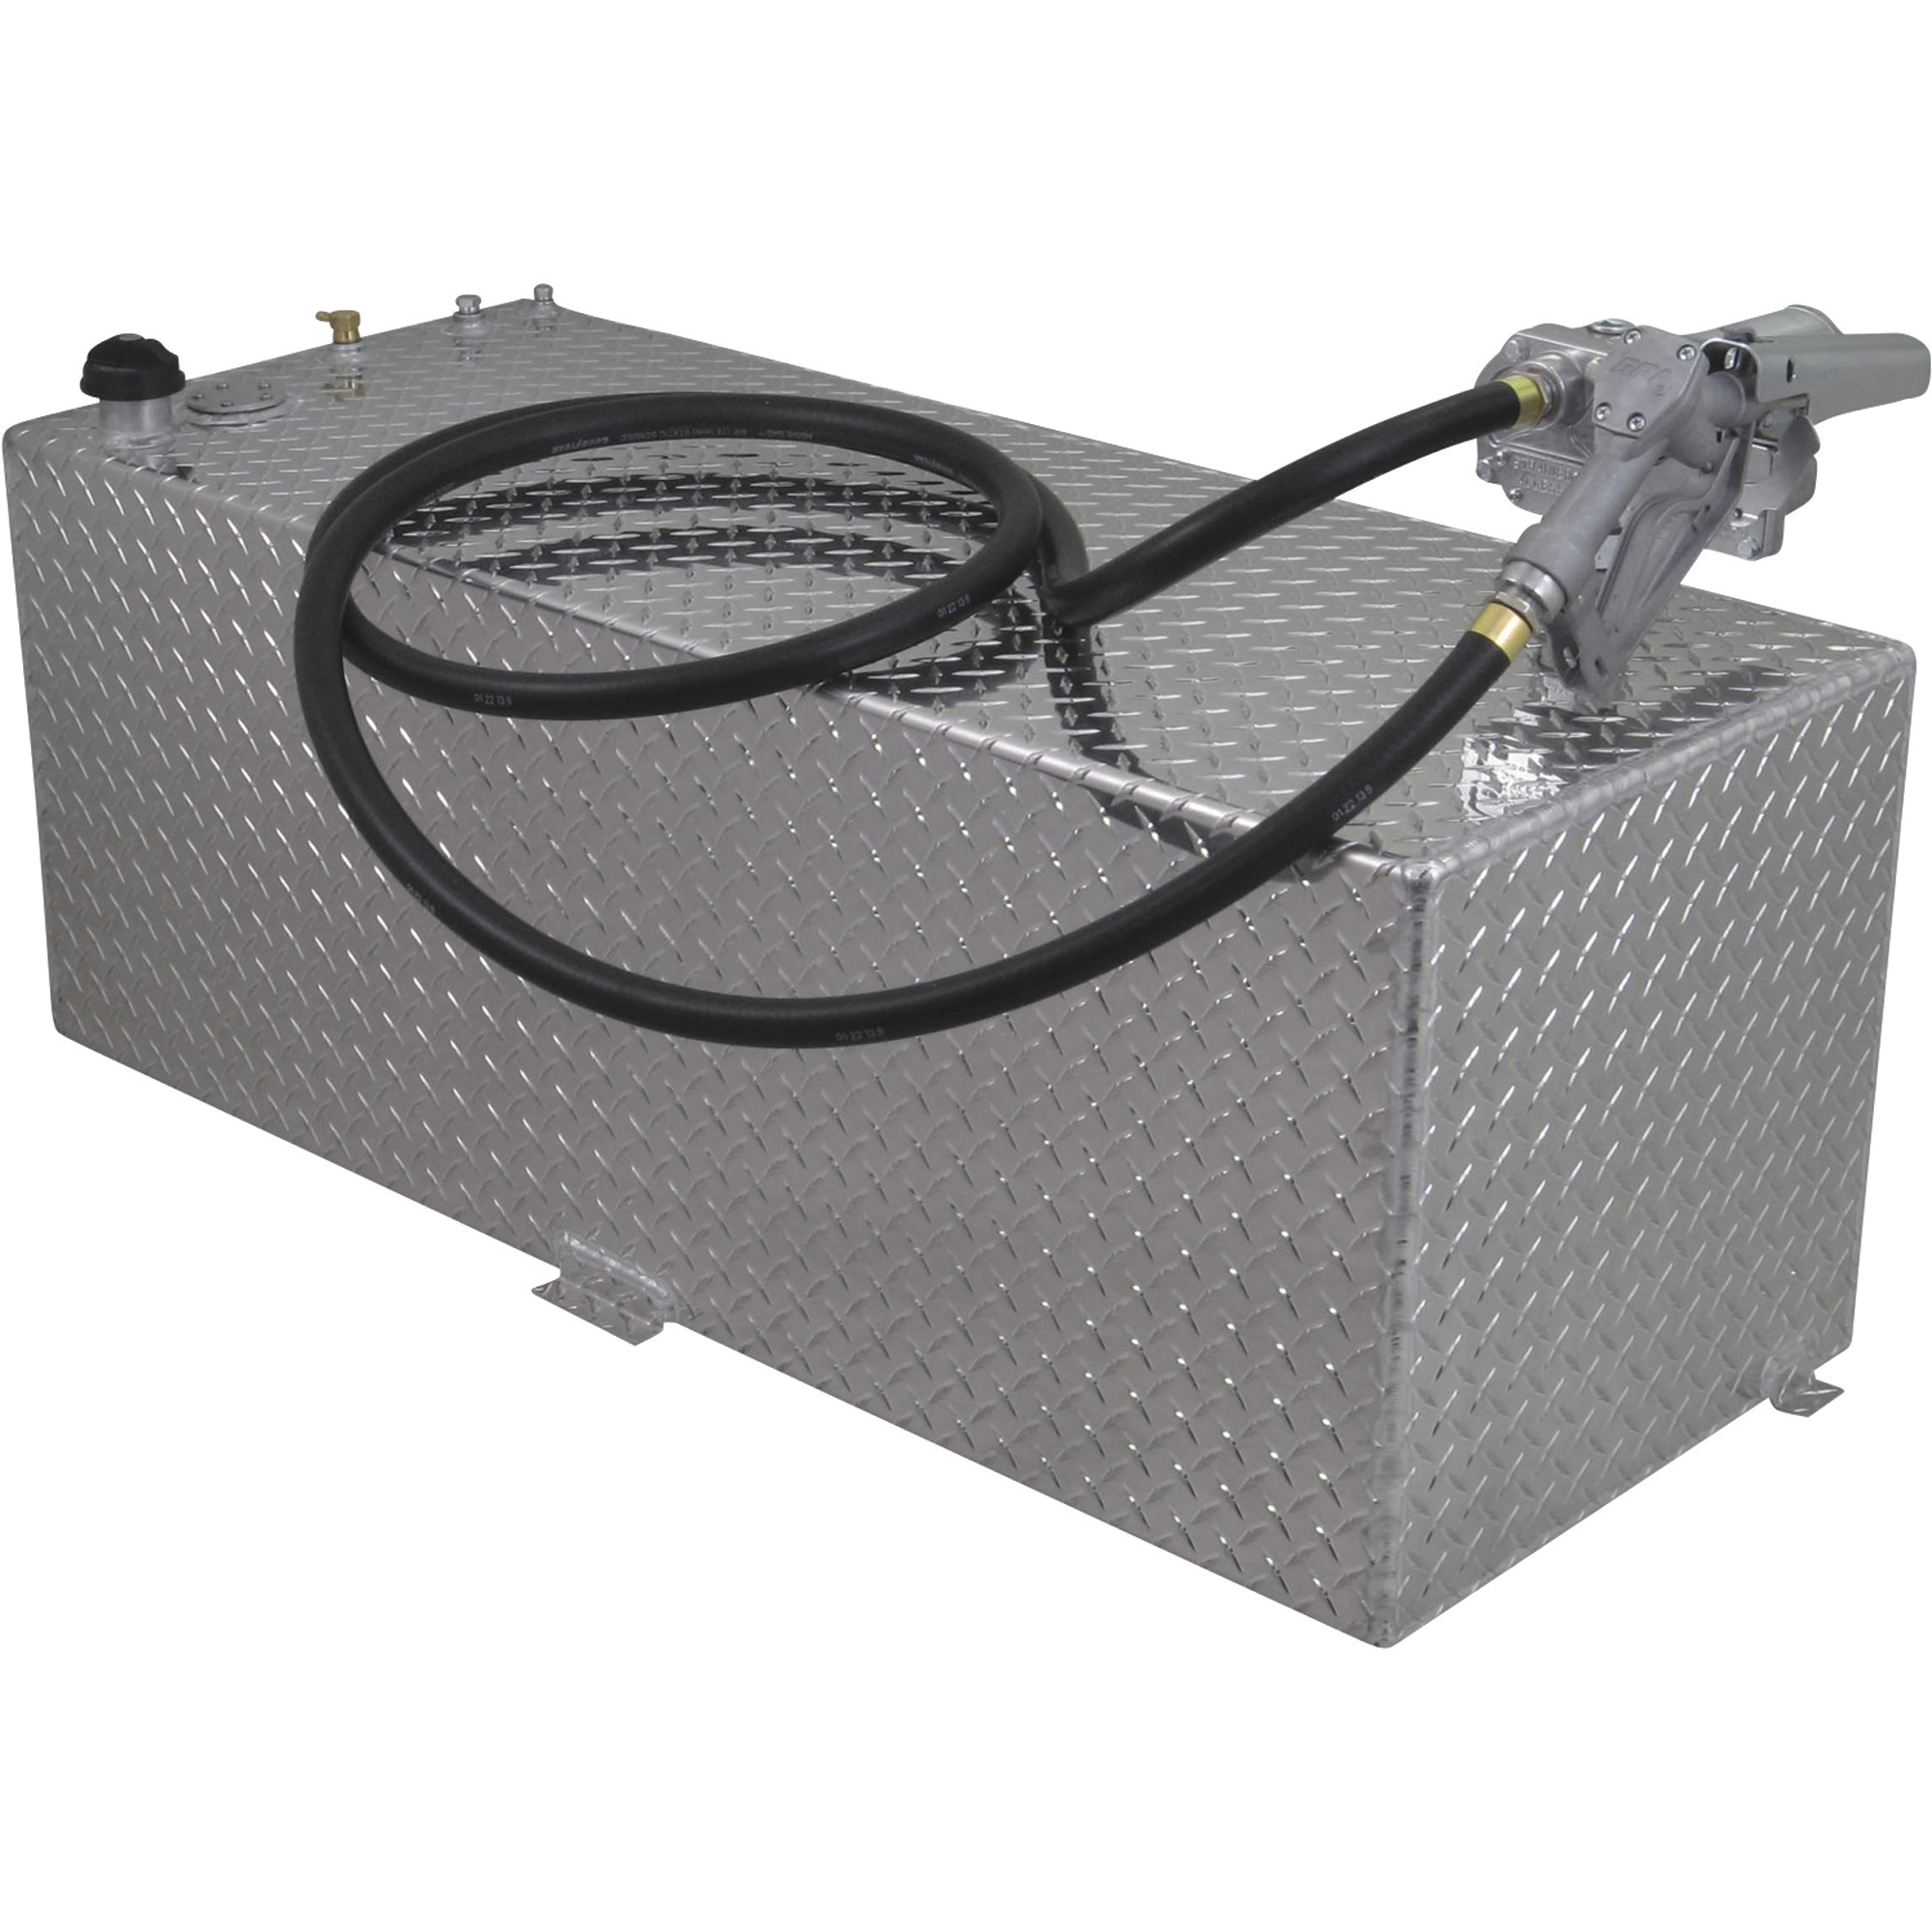 RDS Aluminum Transfer Fuel Tank with GPI 12V Fuel Transfer Pump, 80-Gallon,  Rectangular, Diamond Plate, 15 GPM, Model# 73962